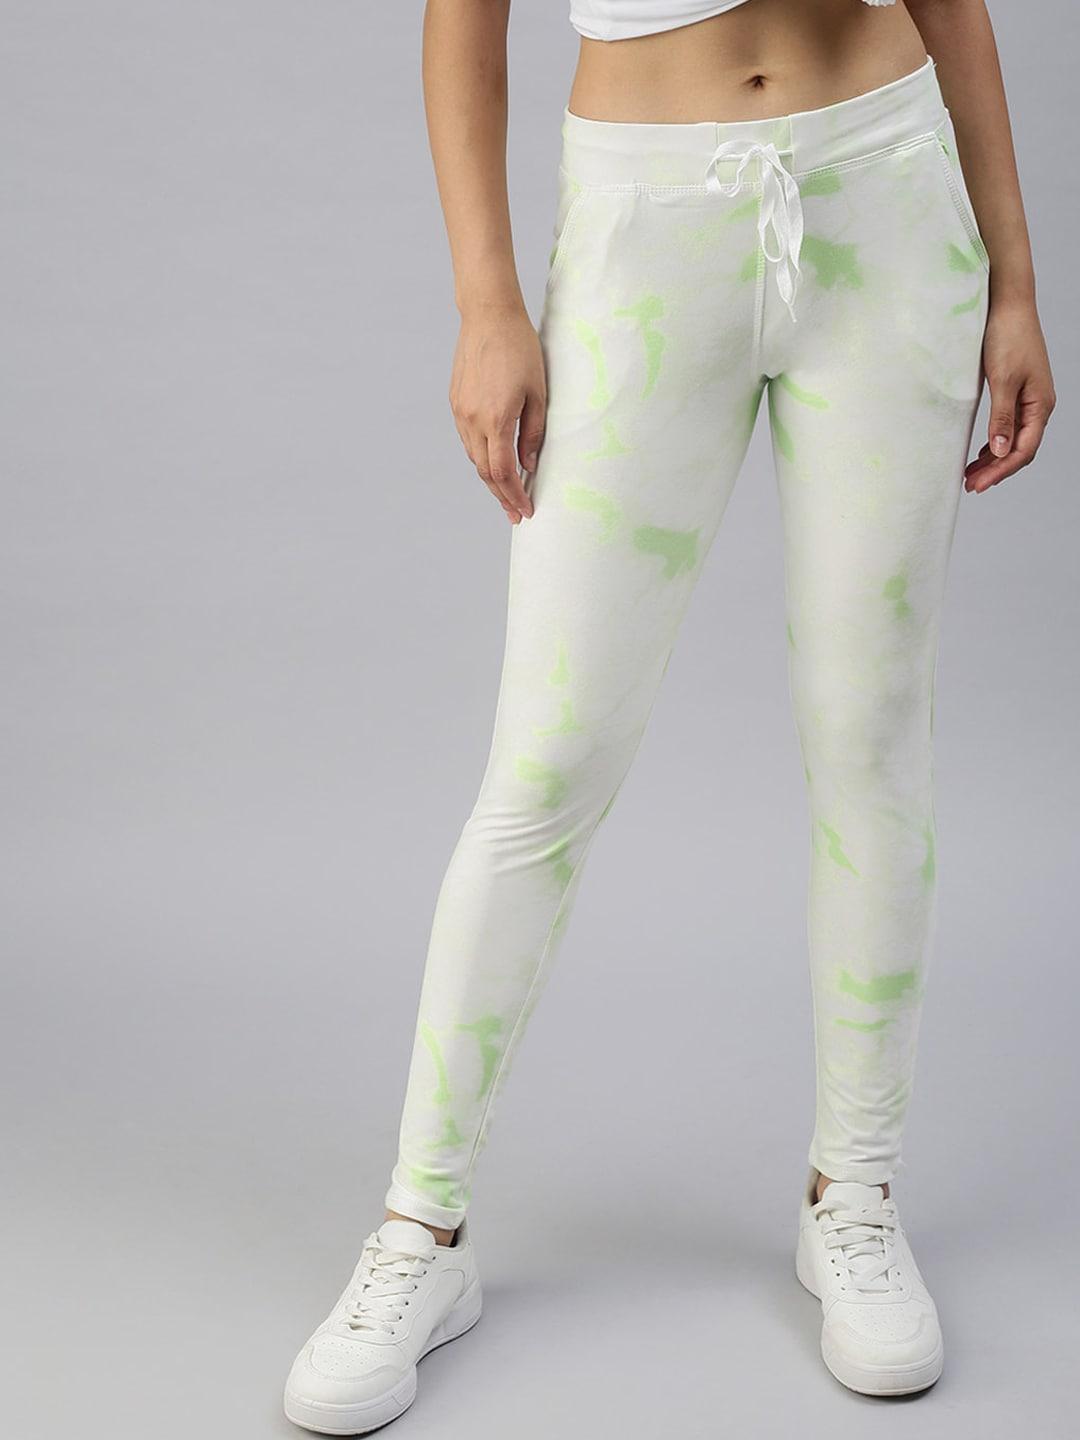 SHOWOFF Women White & Green Tie & Dye Printed Cotton Track Pants